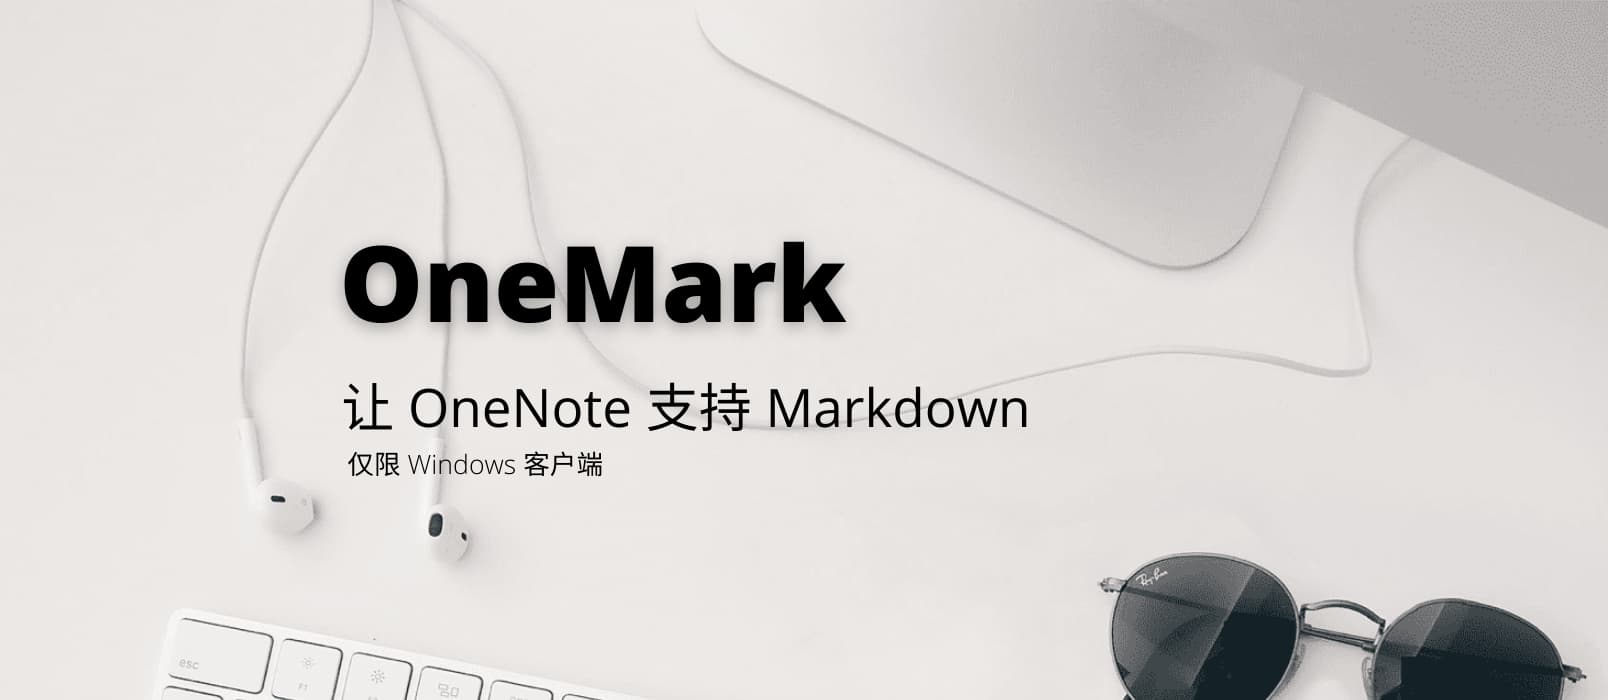 OneMark - 让 Windows 下的 OneNote 支持 Markdown